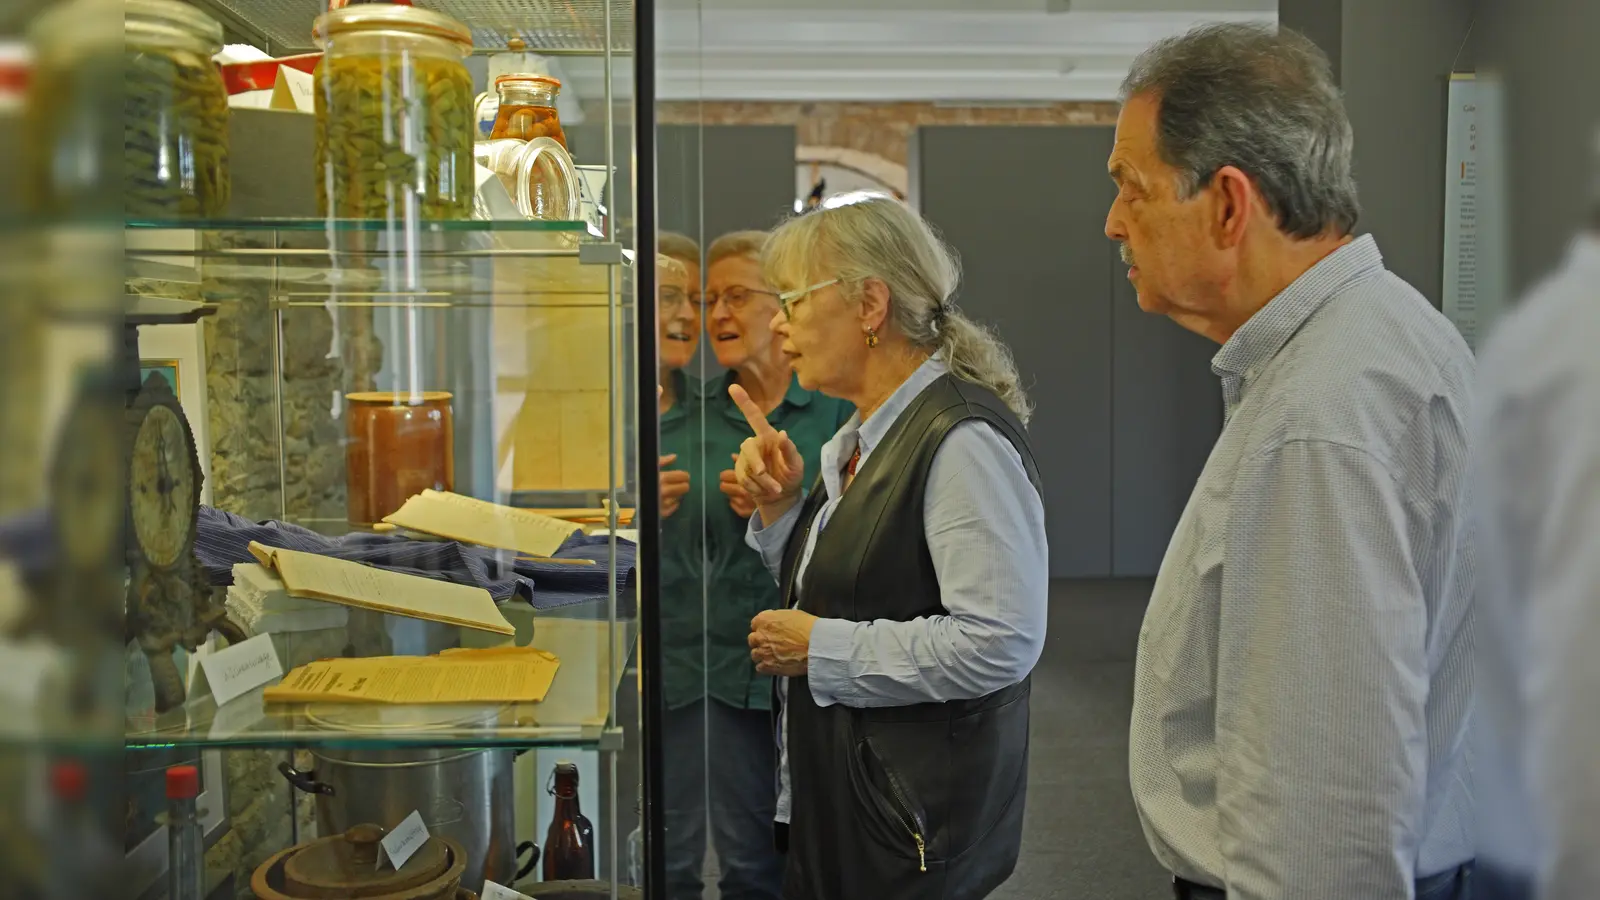 Marita Liebe, Leiterin des Heimatmuseums im Schloss, erläutert Interessierten ein altes Essiggurkenrezept. (Foto: Heimatmuseum im Schloss)